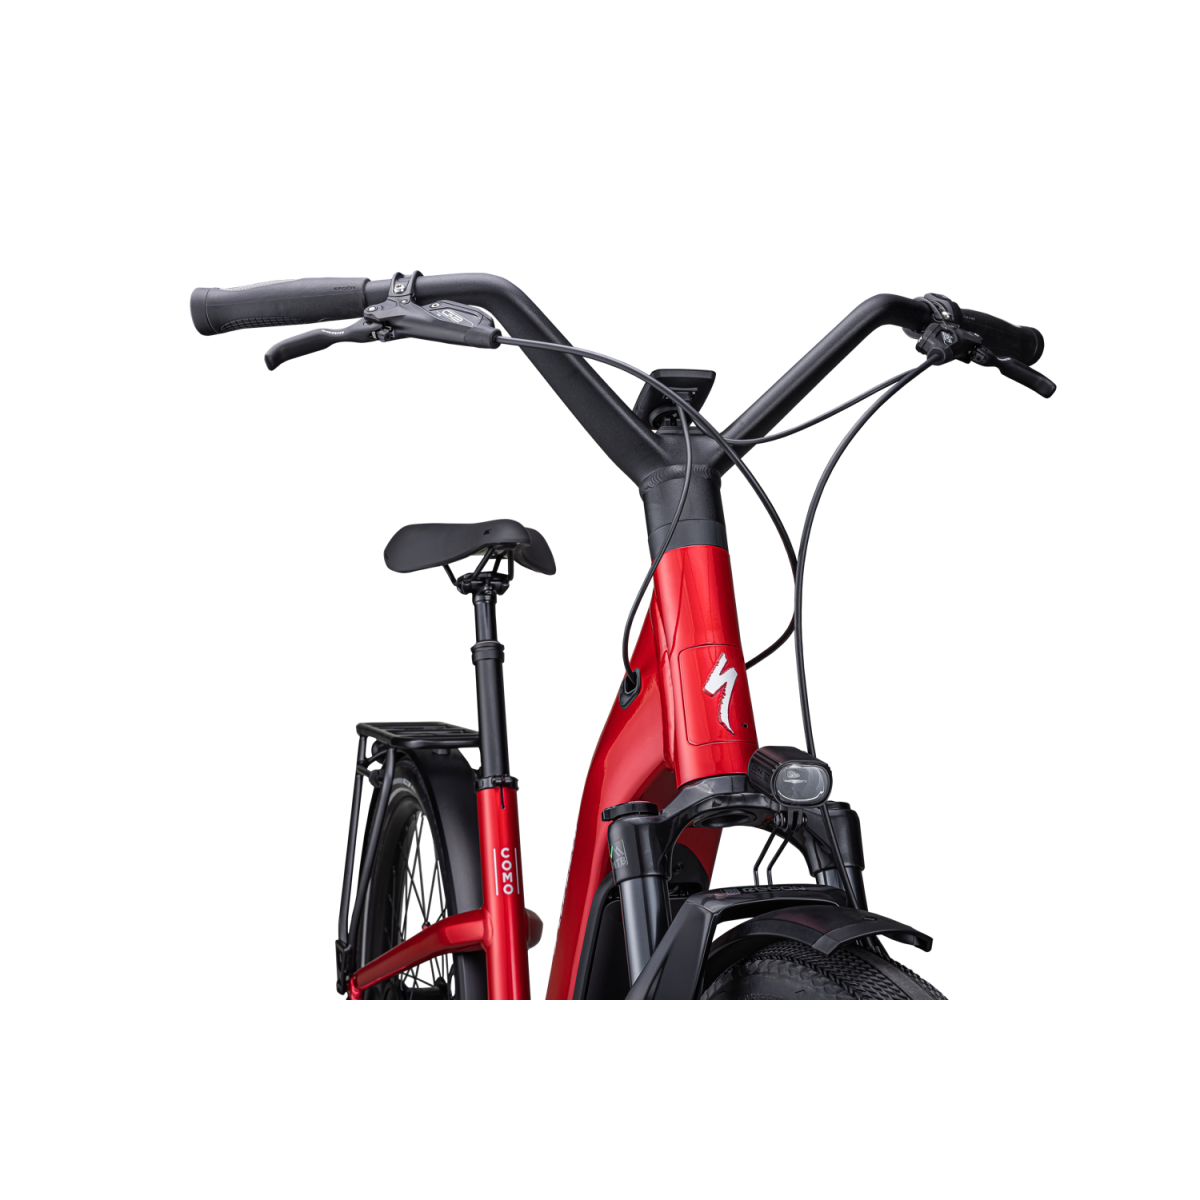 Specialized Turbo Como 5.0 IGH elektrinis dviratis / Red Tint